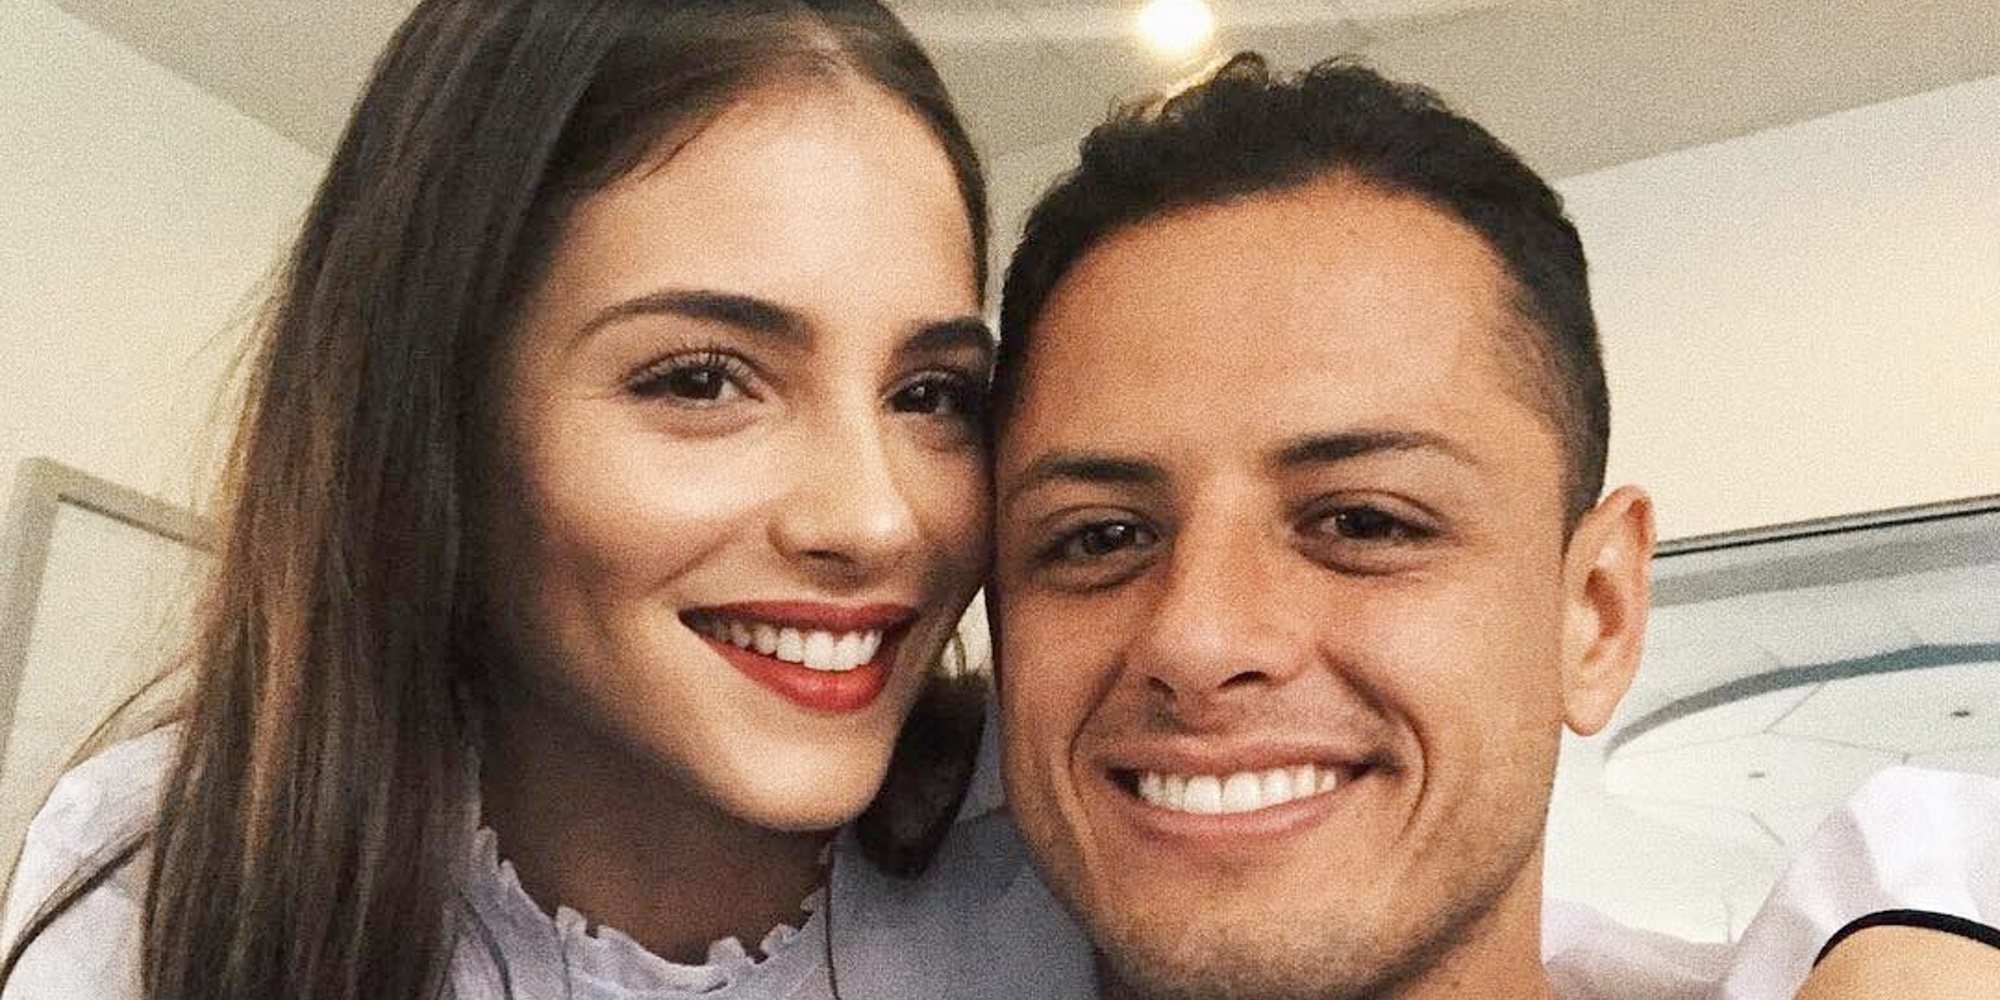 Andrea Duro felicita a Chicharito tras anunciar que será padre junto a Sarah Kohan